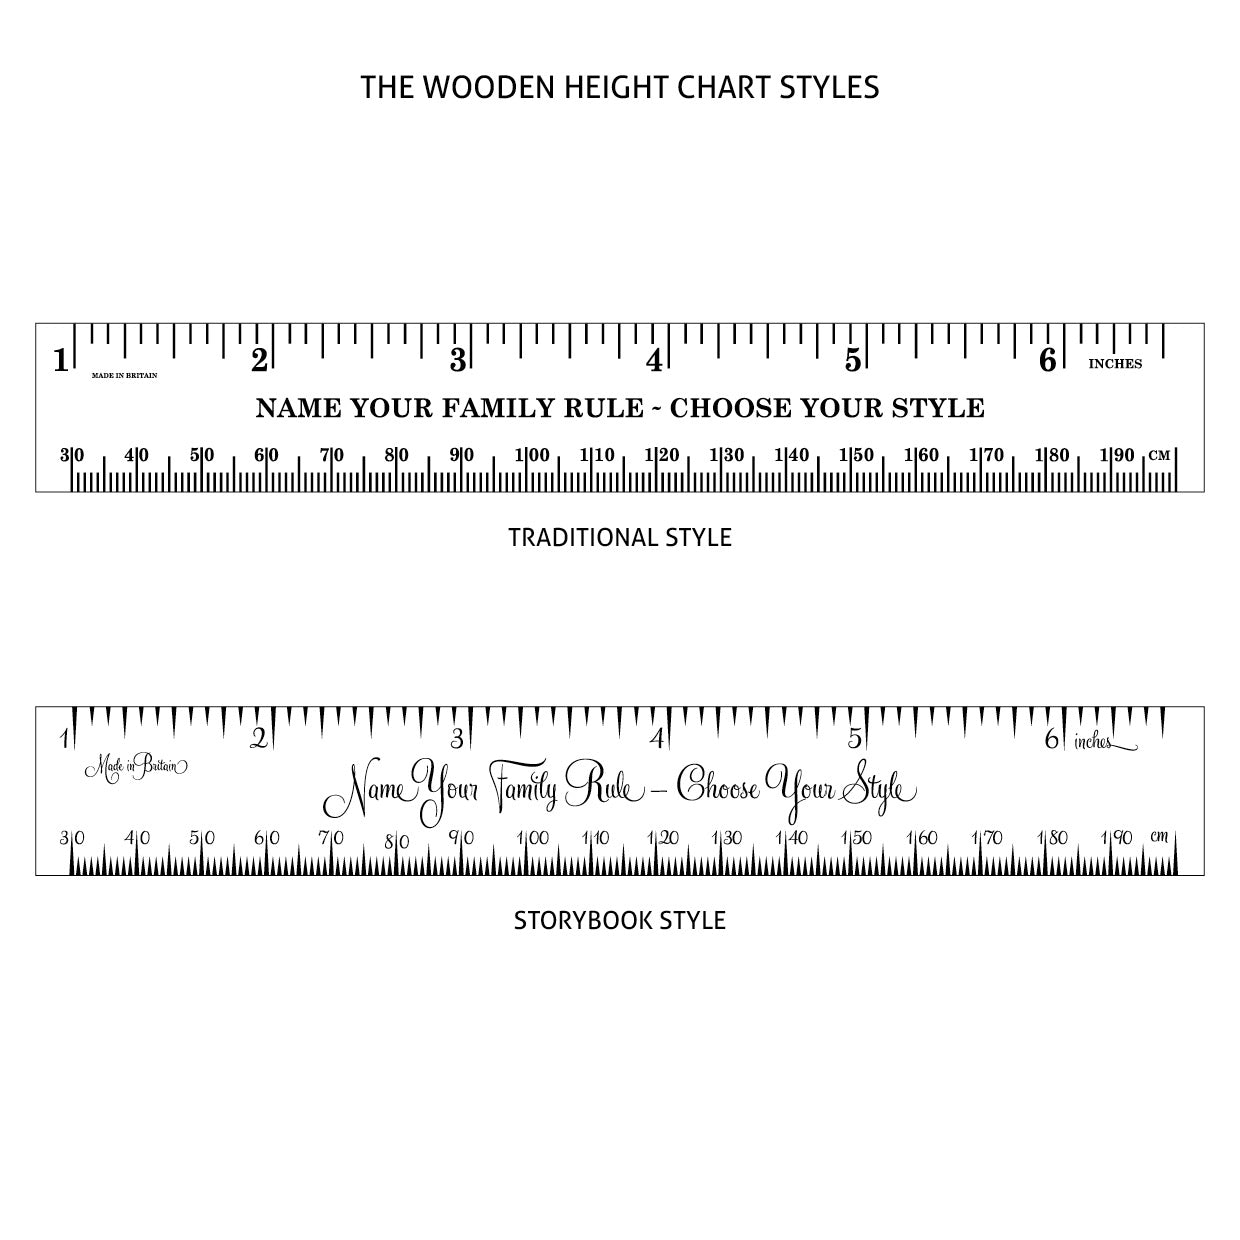 Standard Deluxe Ash Vintage Ruler Height Chart